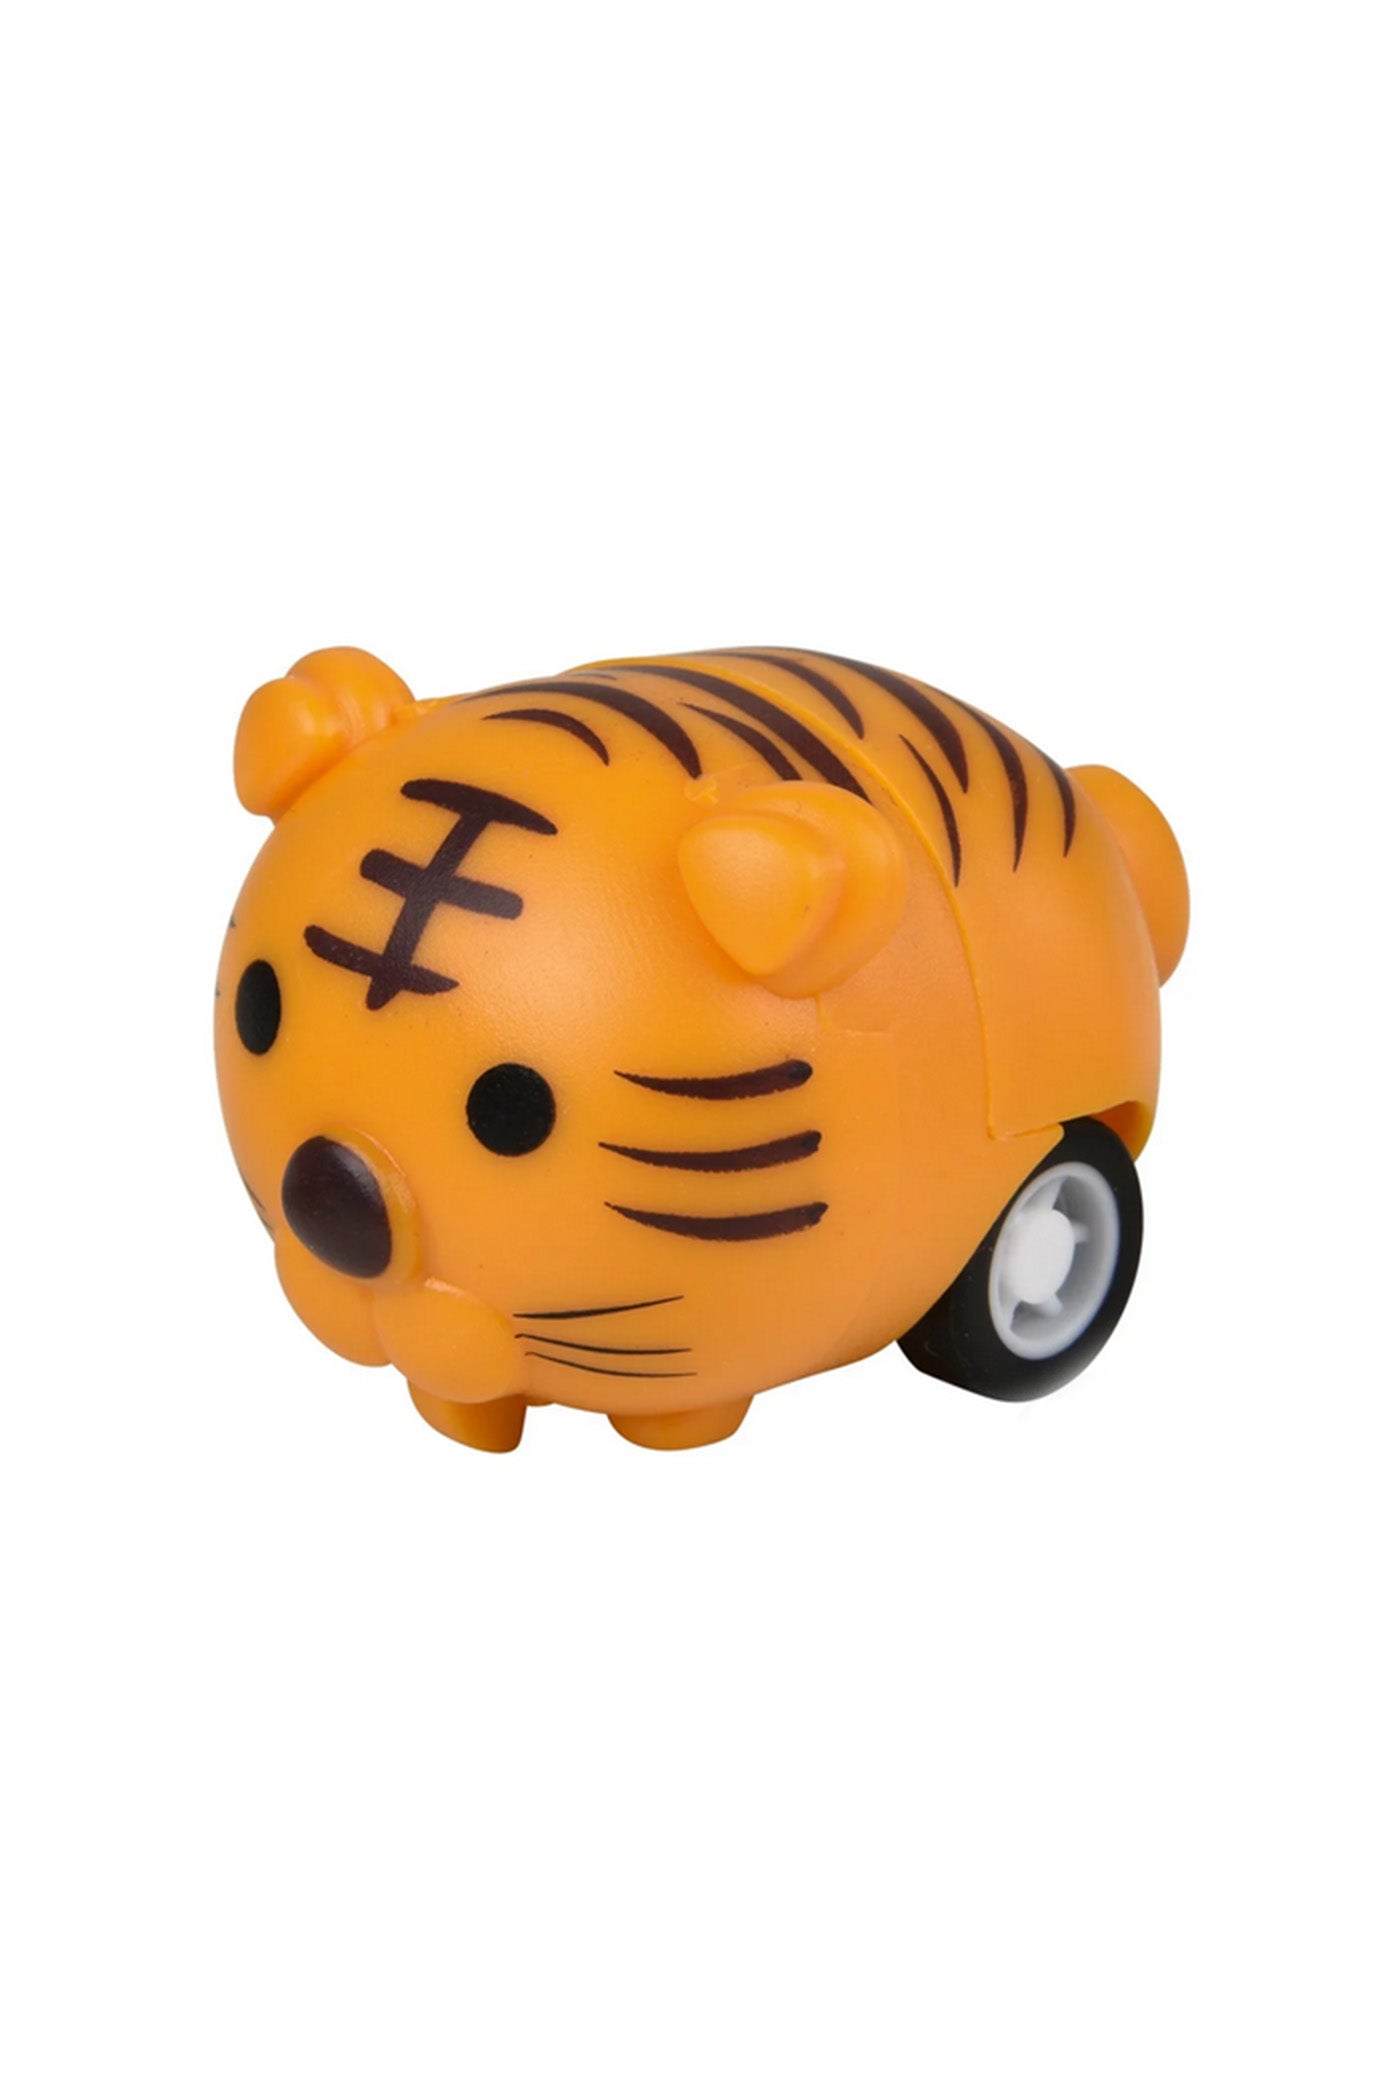 1.5" Mini Animal Pull Back Car Kids Toy